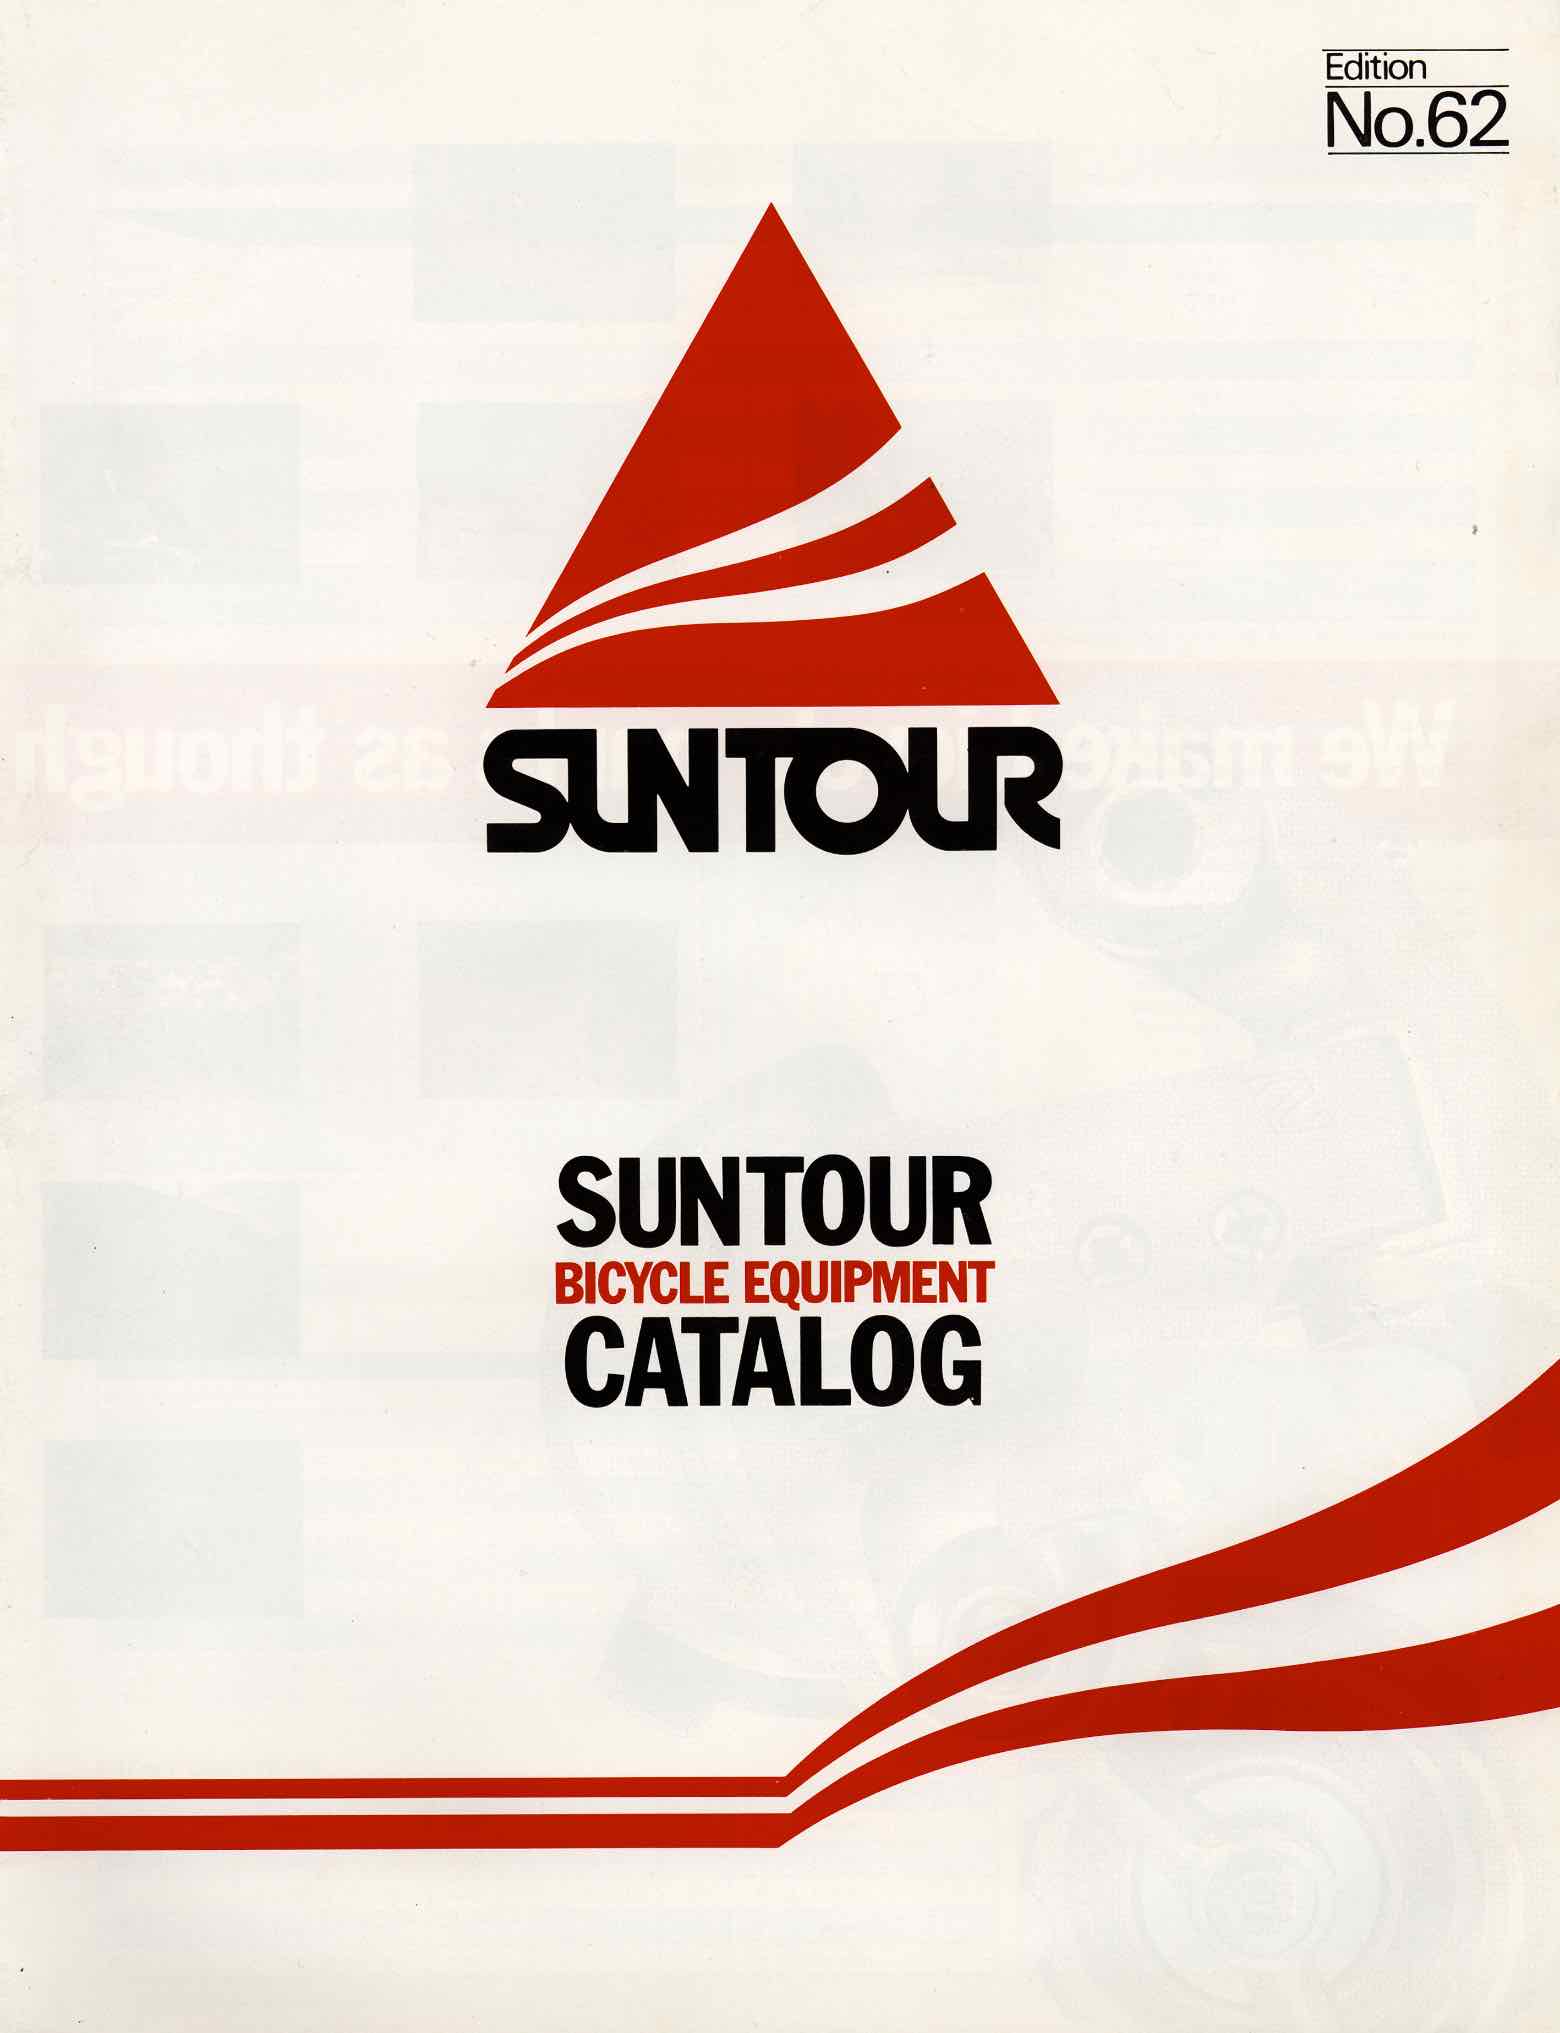 SunTour Bicycle Equipment Catalog No 62 - Front cover main image